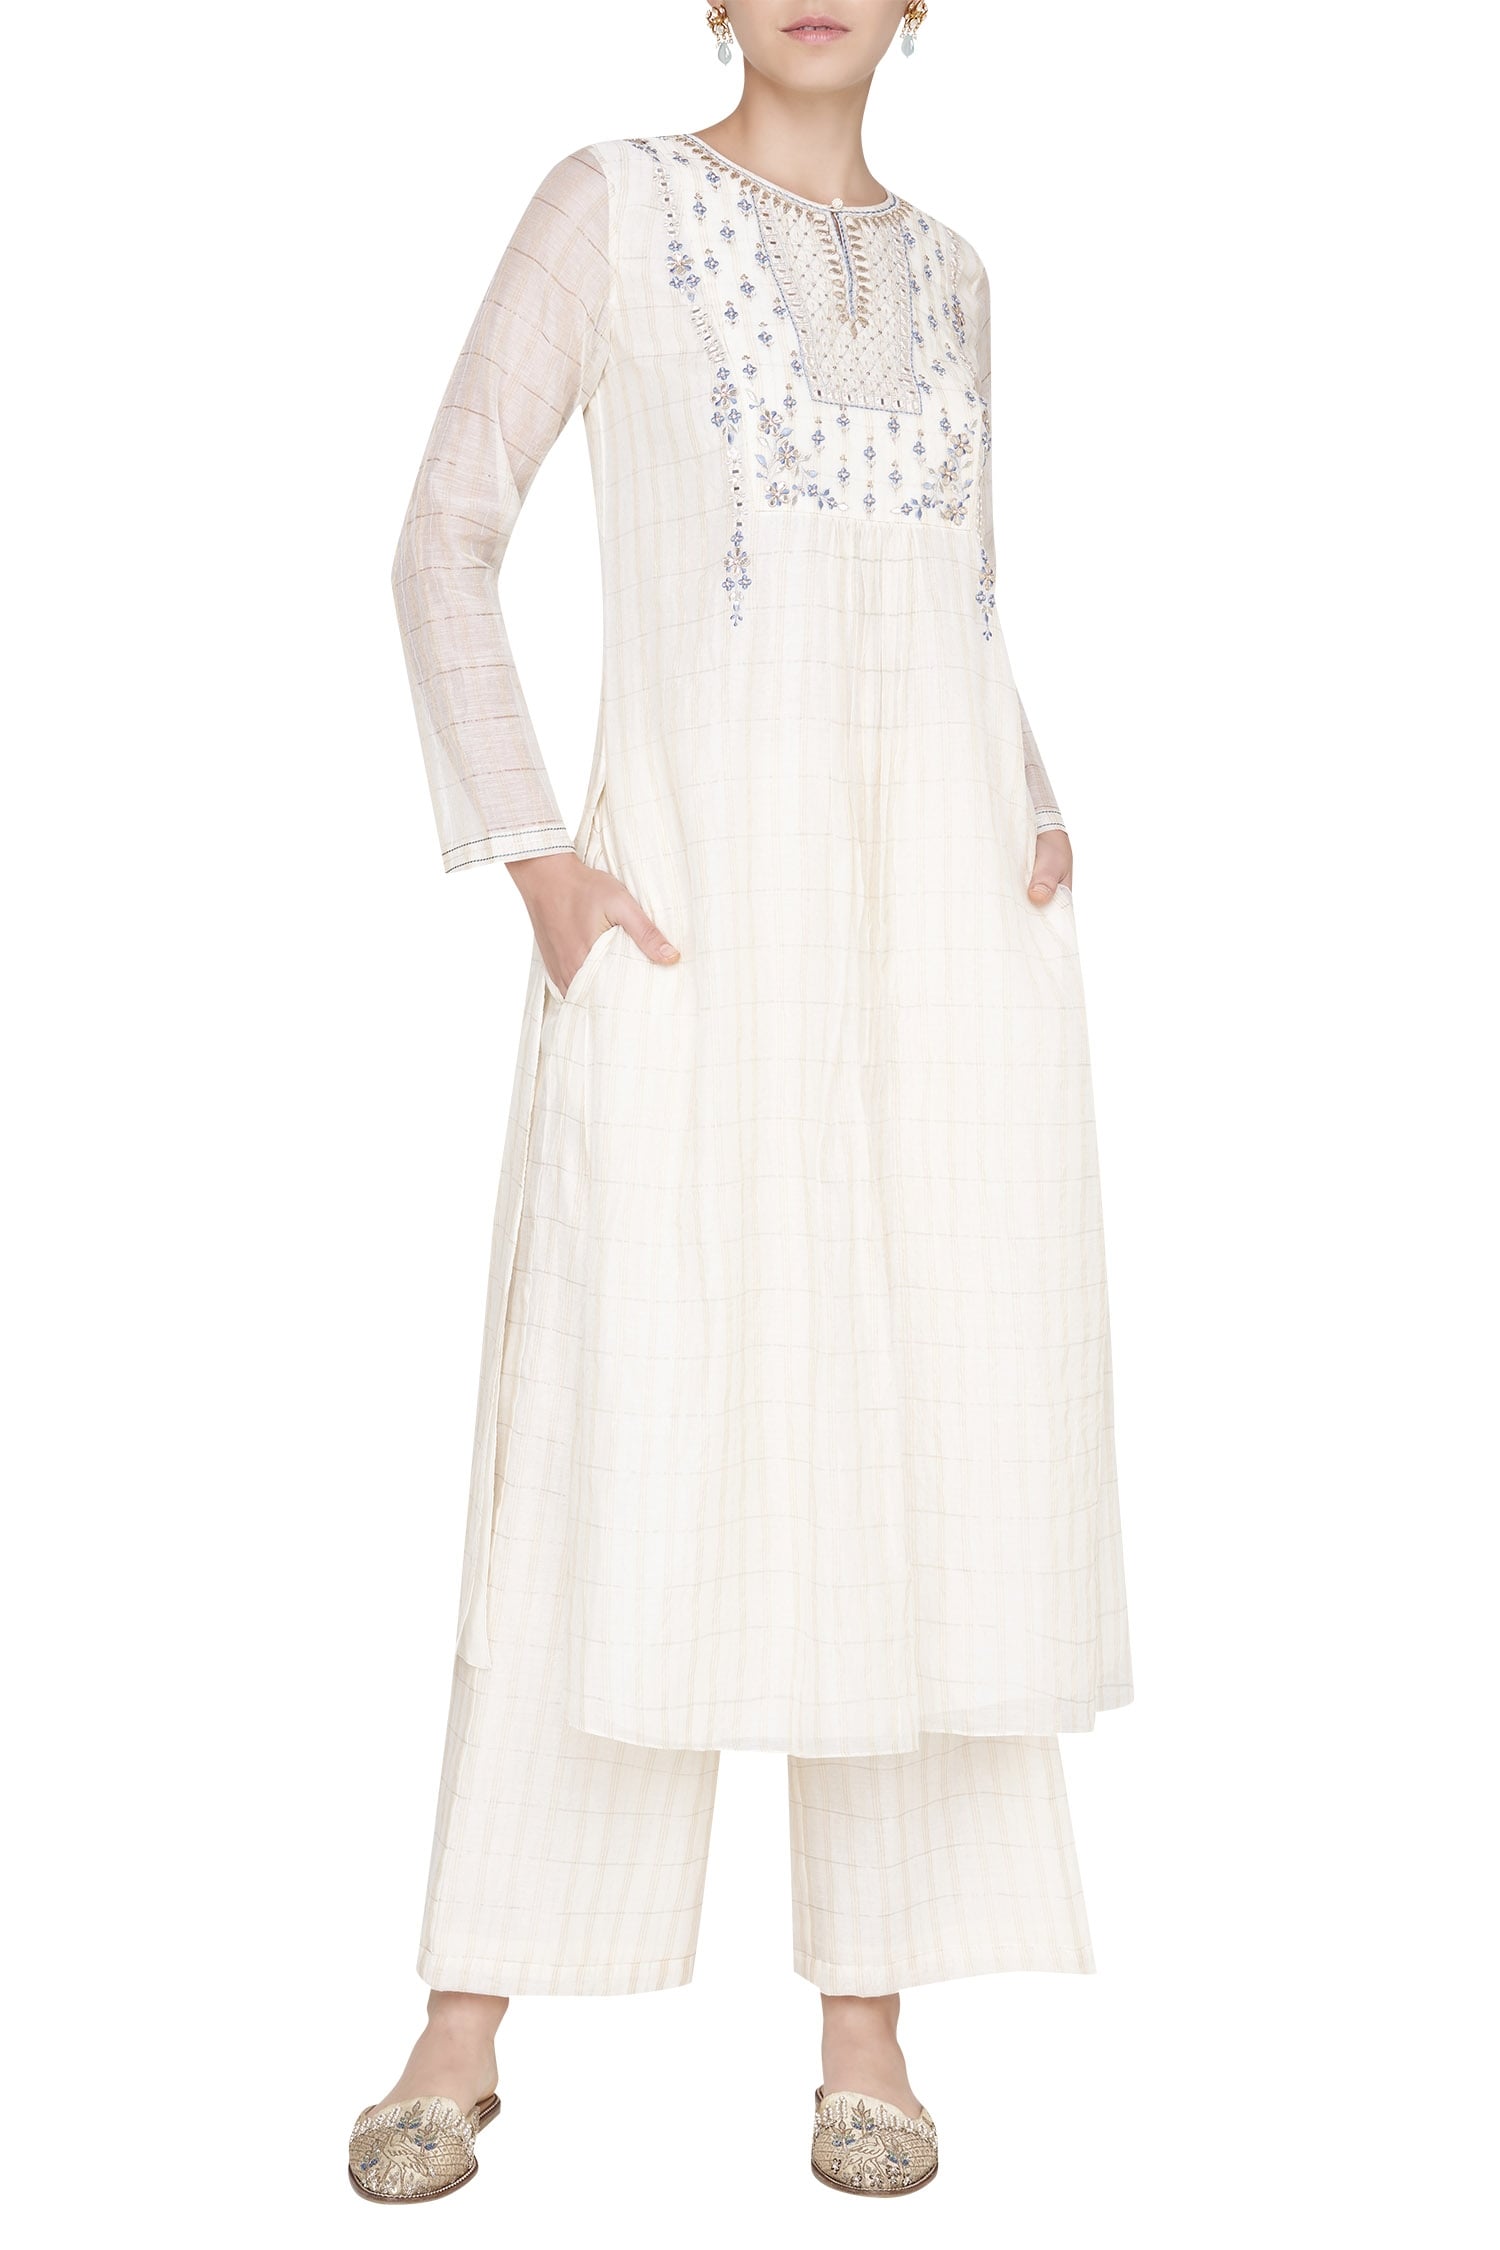 Buy Anita Dongre Sabeena Set Online | Aza Fashions